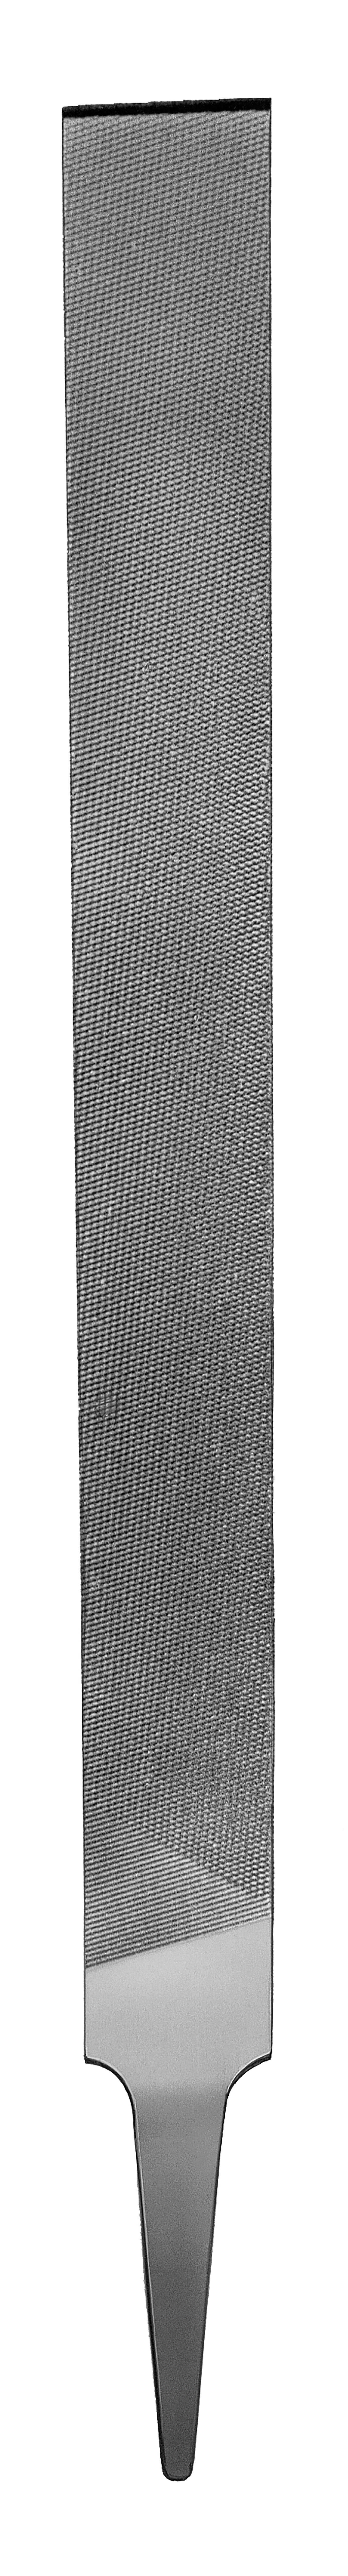 Foto of  Werkplaatsvijlen conform DIN 7261, vorm D, keep 3, 200 mm 